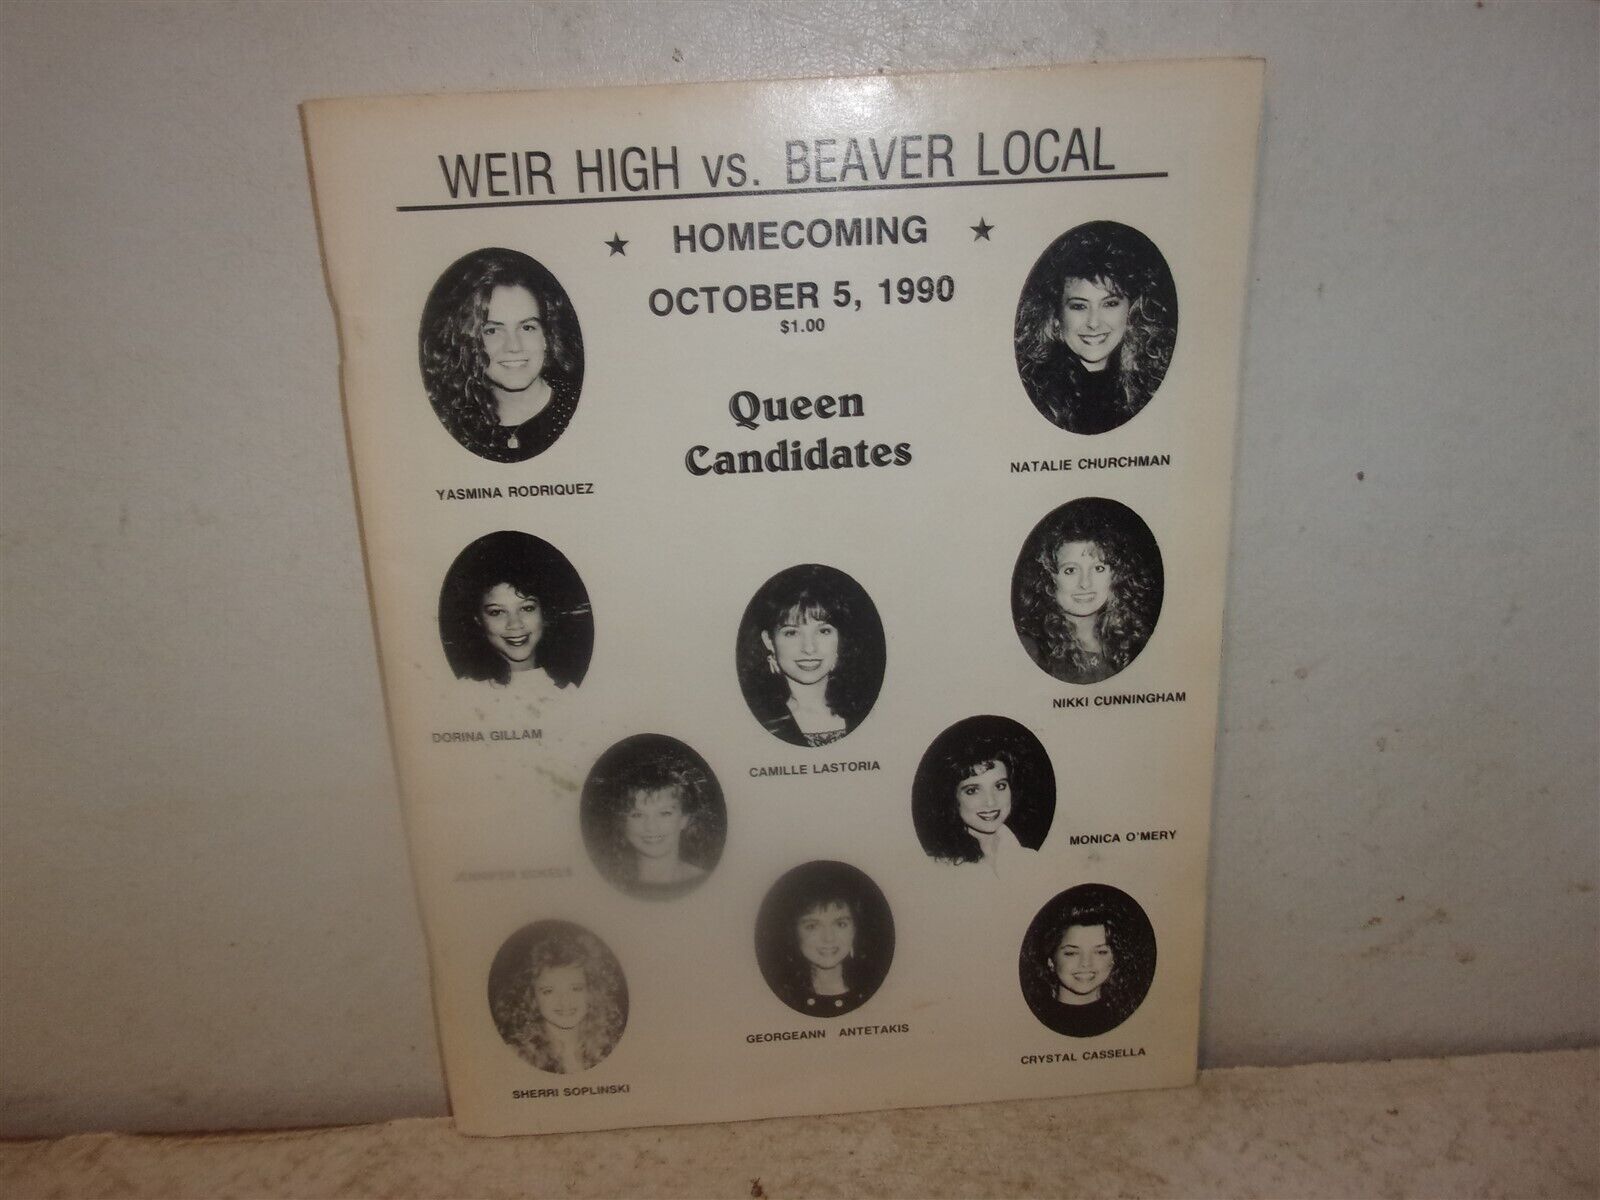 1990 Weir High vs. Beaver Local Homecoming - October 5, 1990